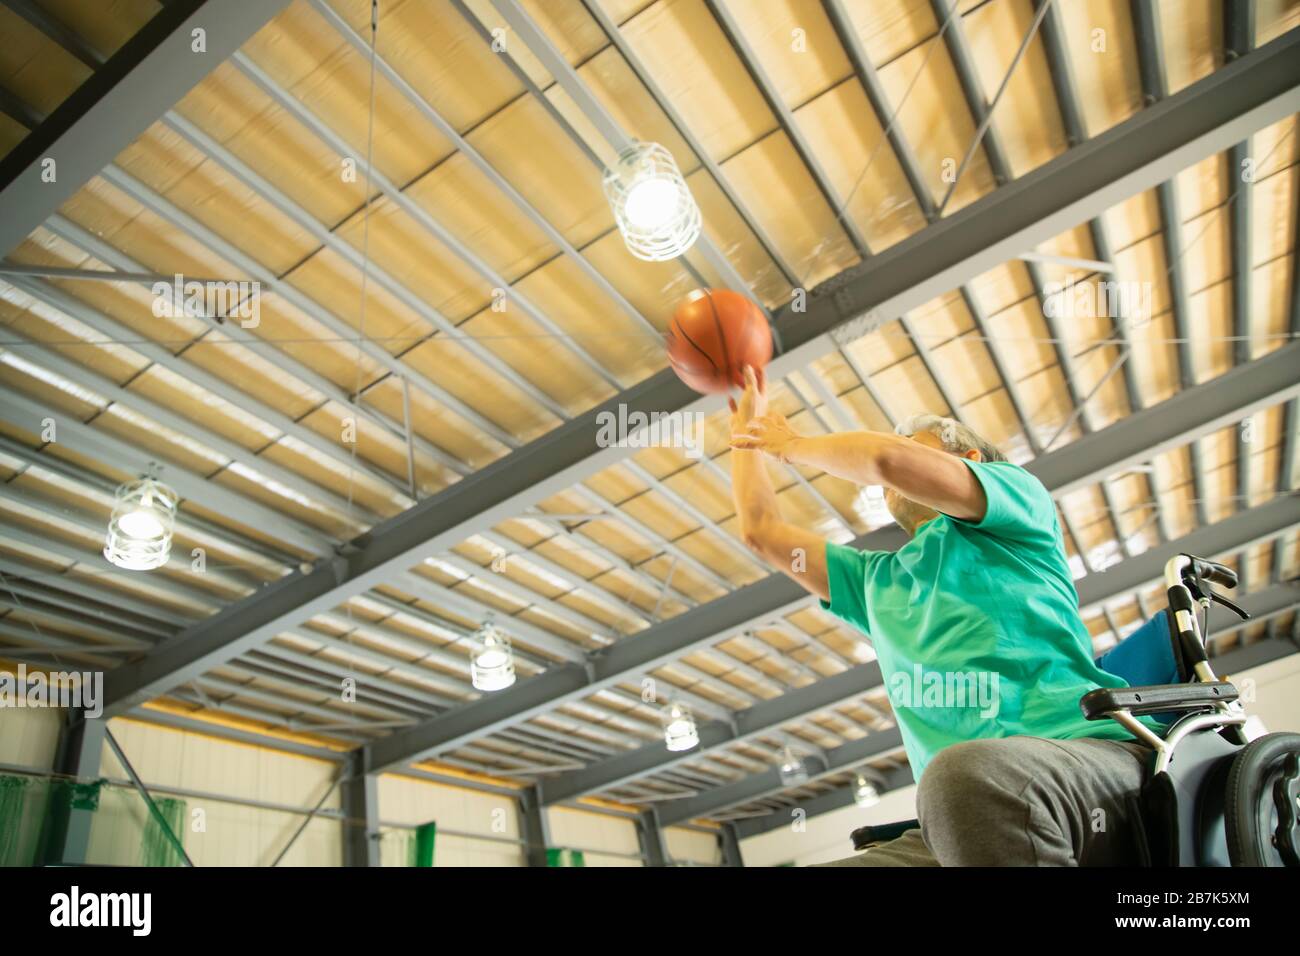 Senior man in wheelchair shooting basket ball Stock Photo